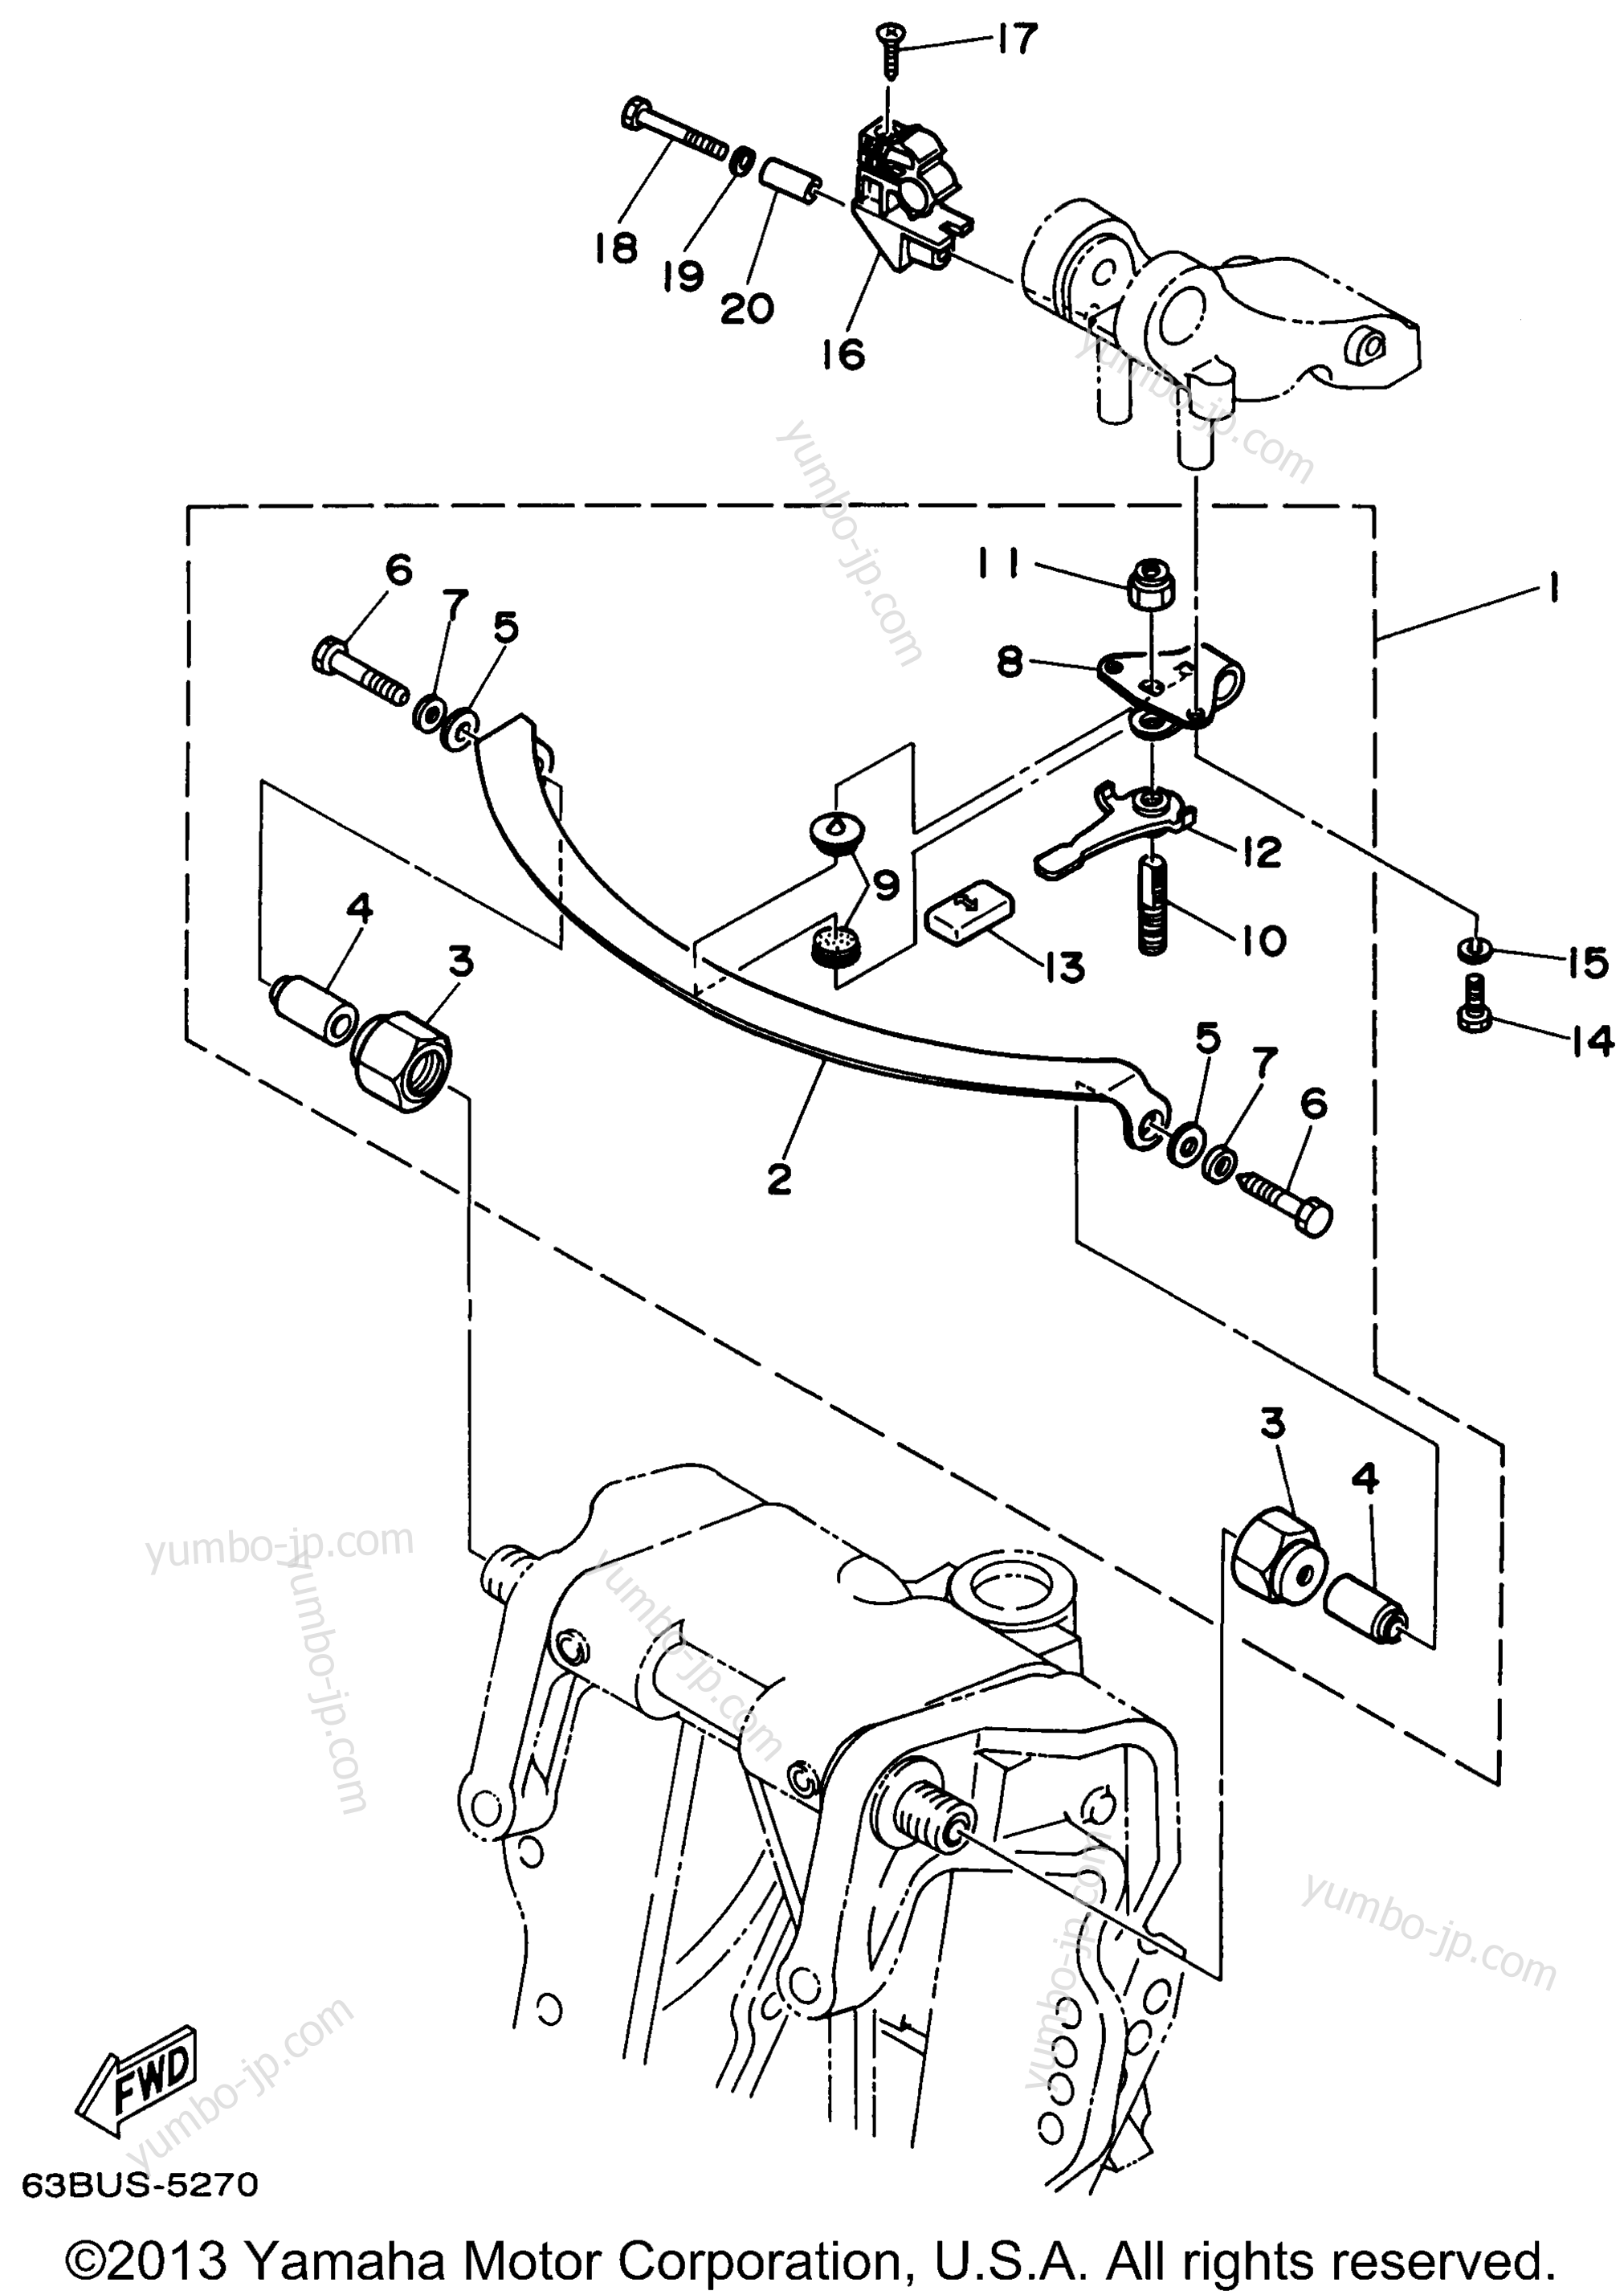 Alternate 2 Steering Friction для лодочных моторов YAMAHA P40EJRW_THLW (P40TLRW) 1998 г.